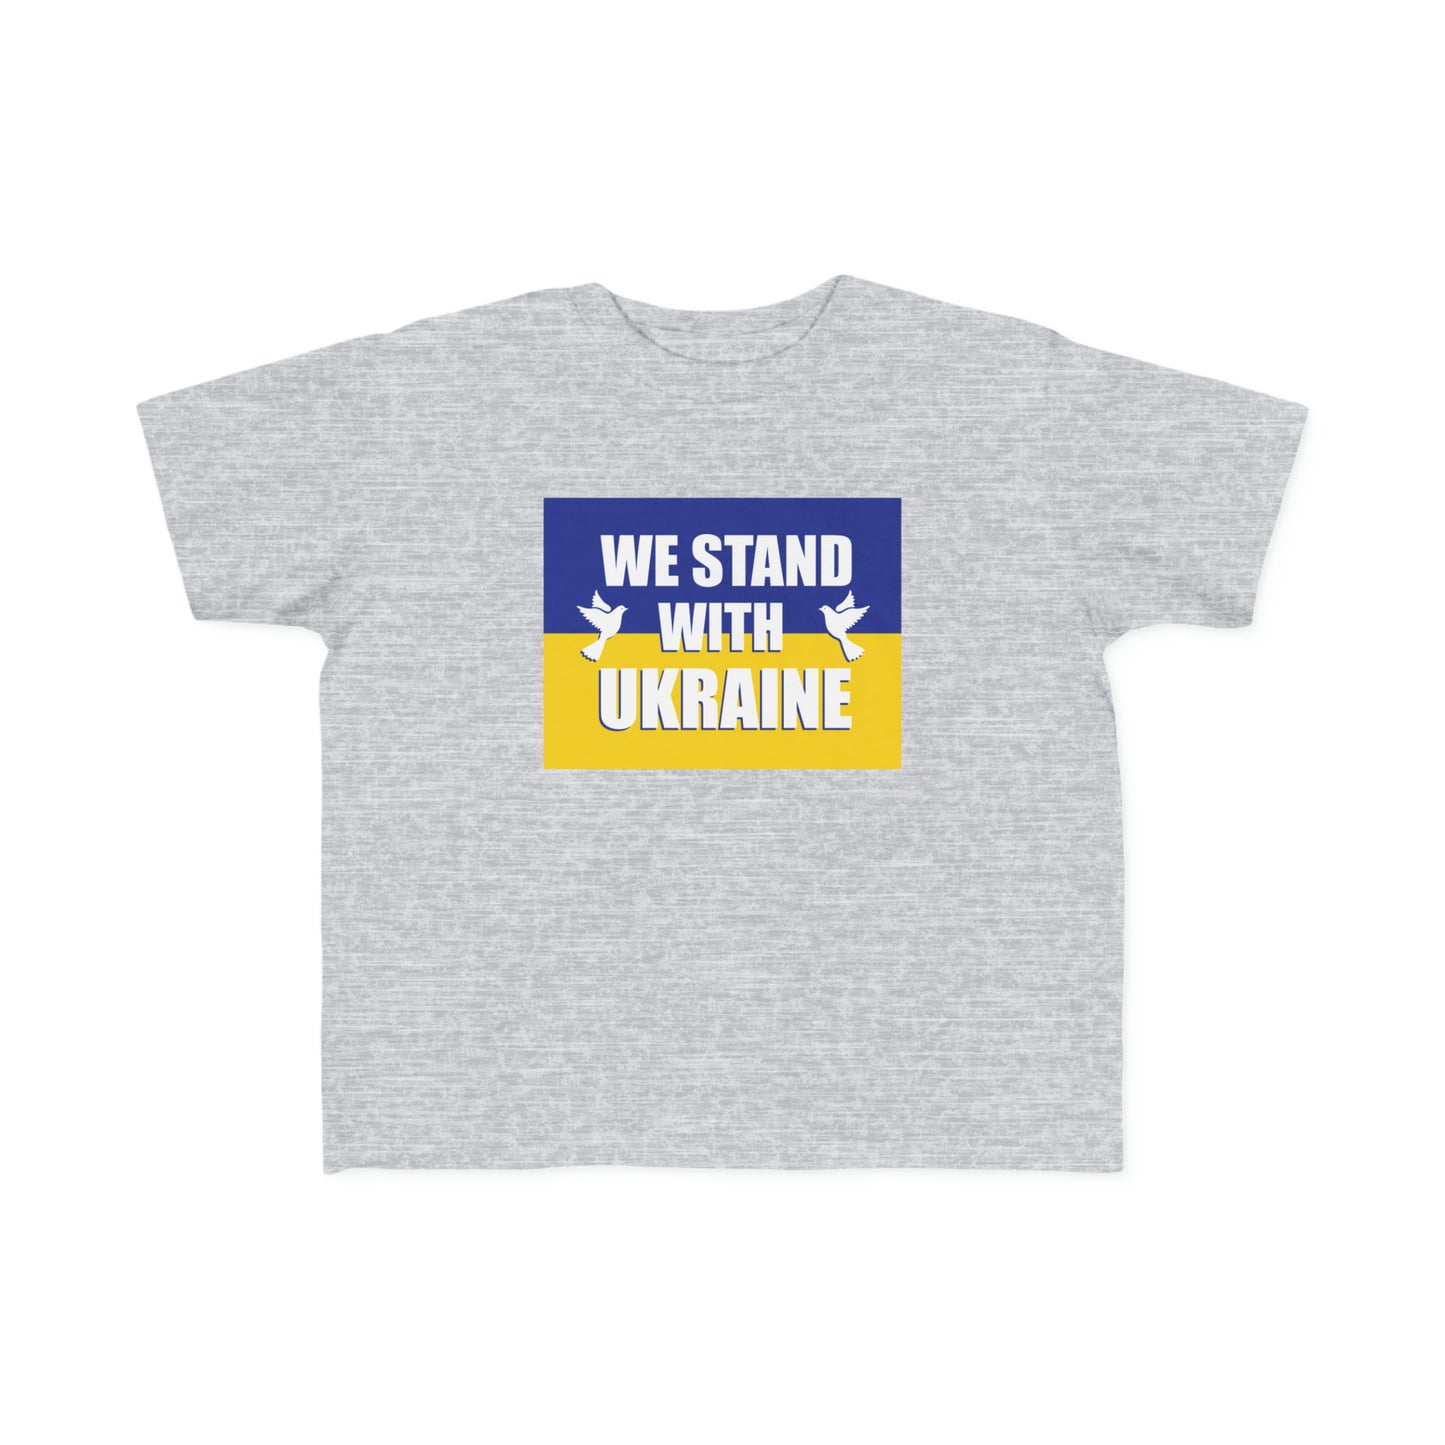 “We Stand With Ukraine” Toddler's Tee